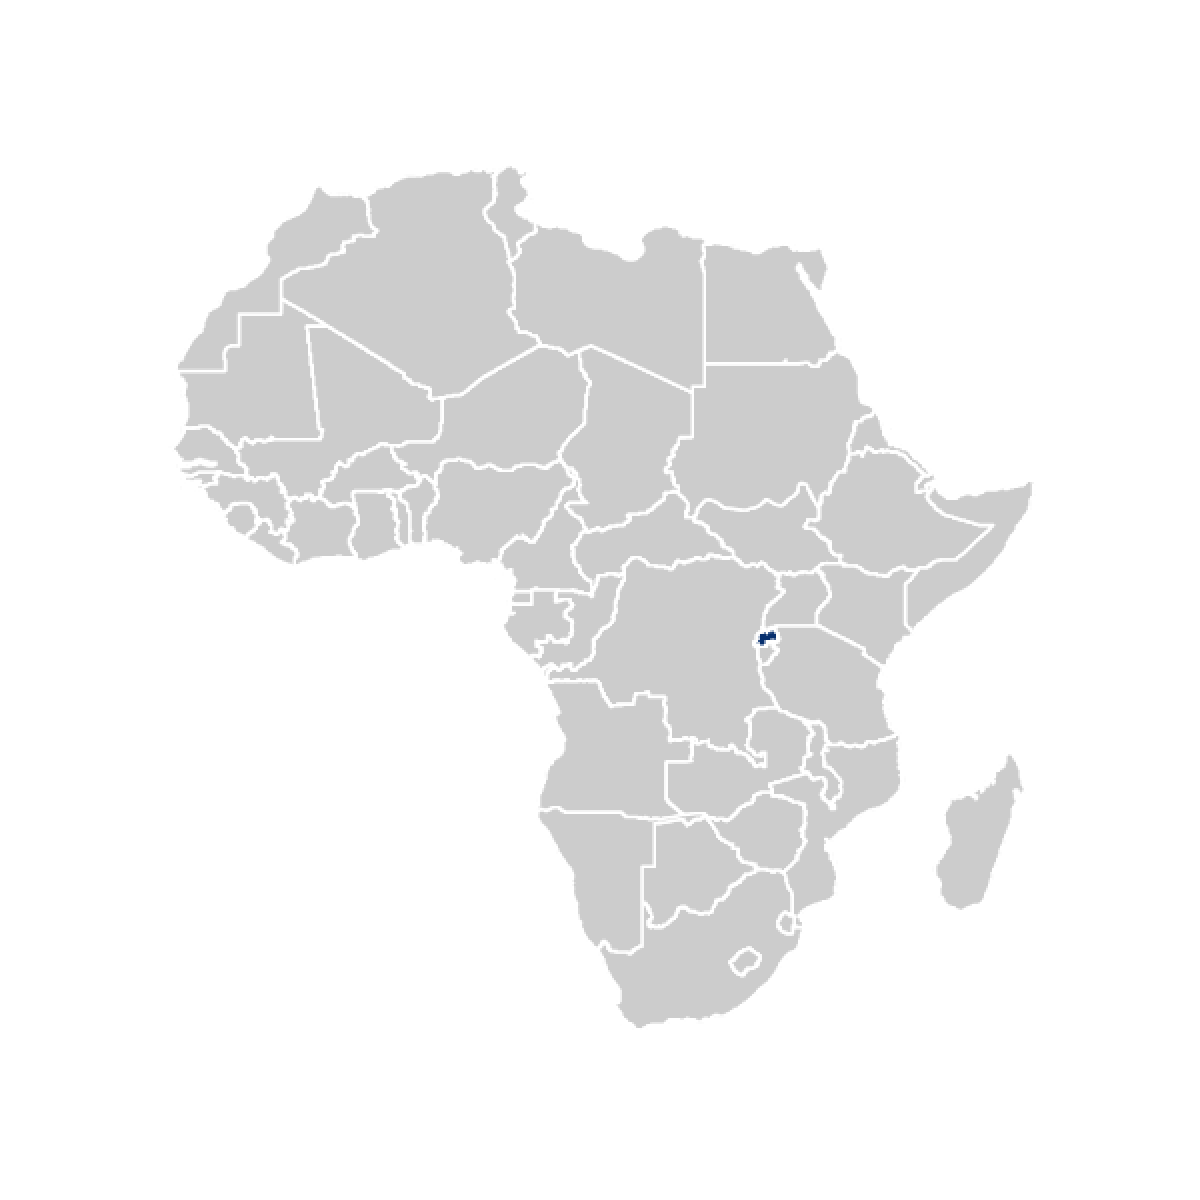 Rwanda highlight on Africa map